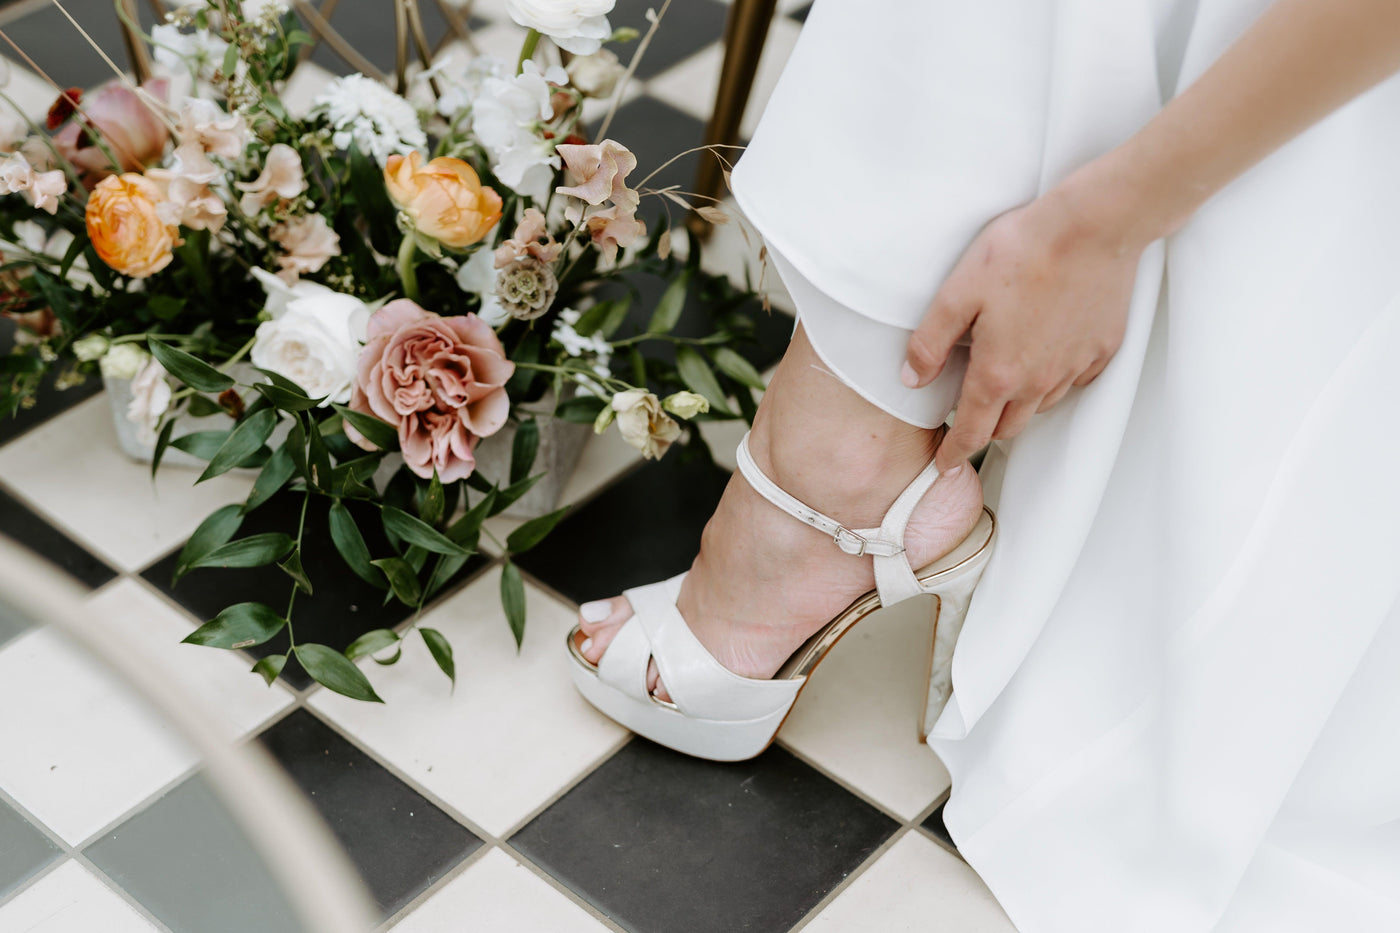 Freya's Top Picks: 10 Beautiful Floral Statement Pearl Wedding Shoes